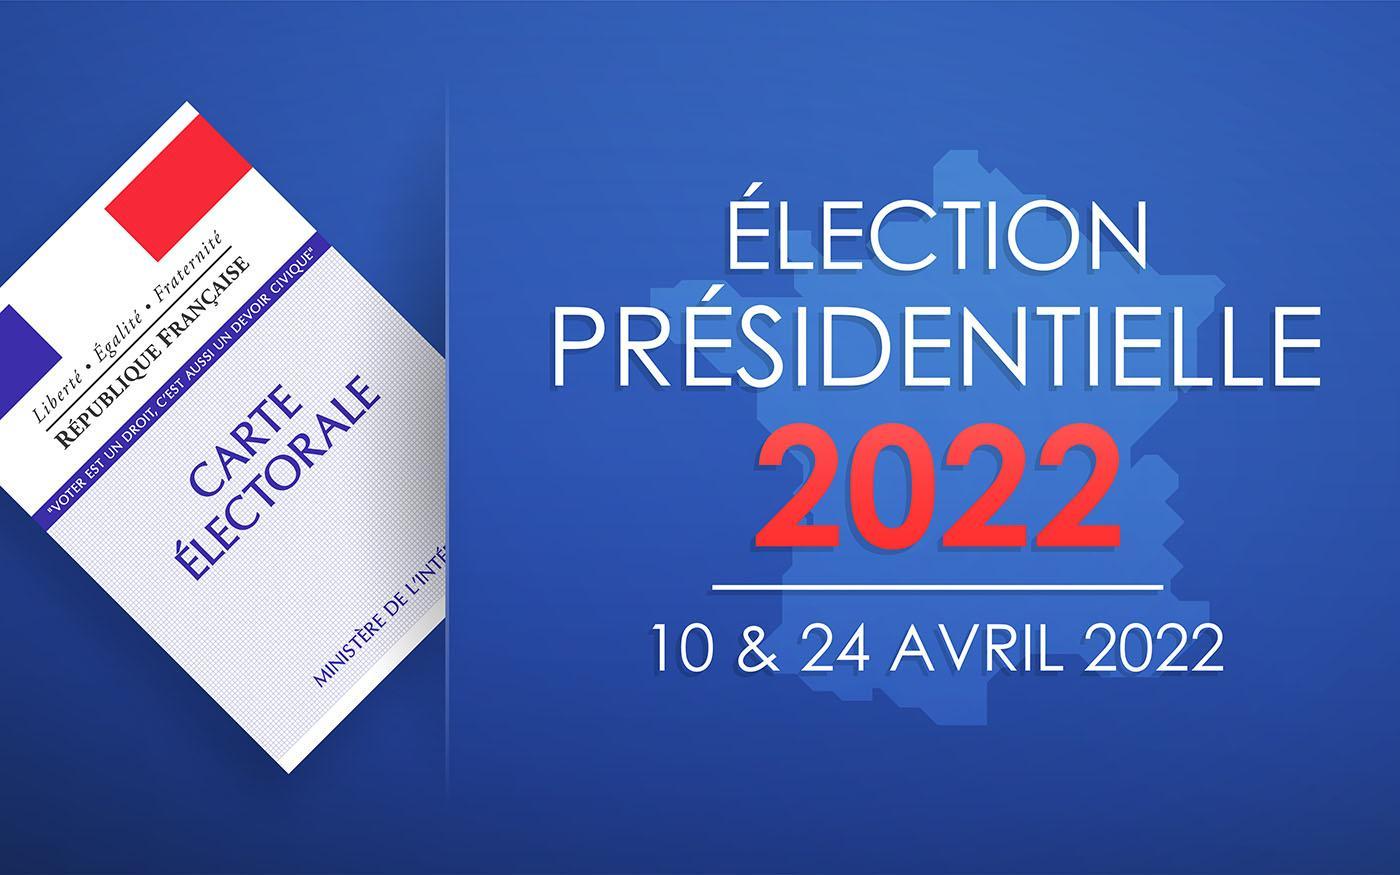 Election presidentielle dates cles 462935562 drupal